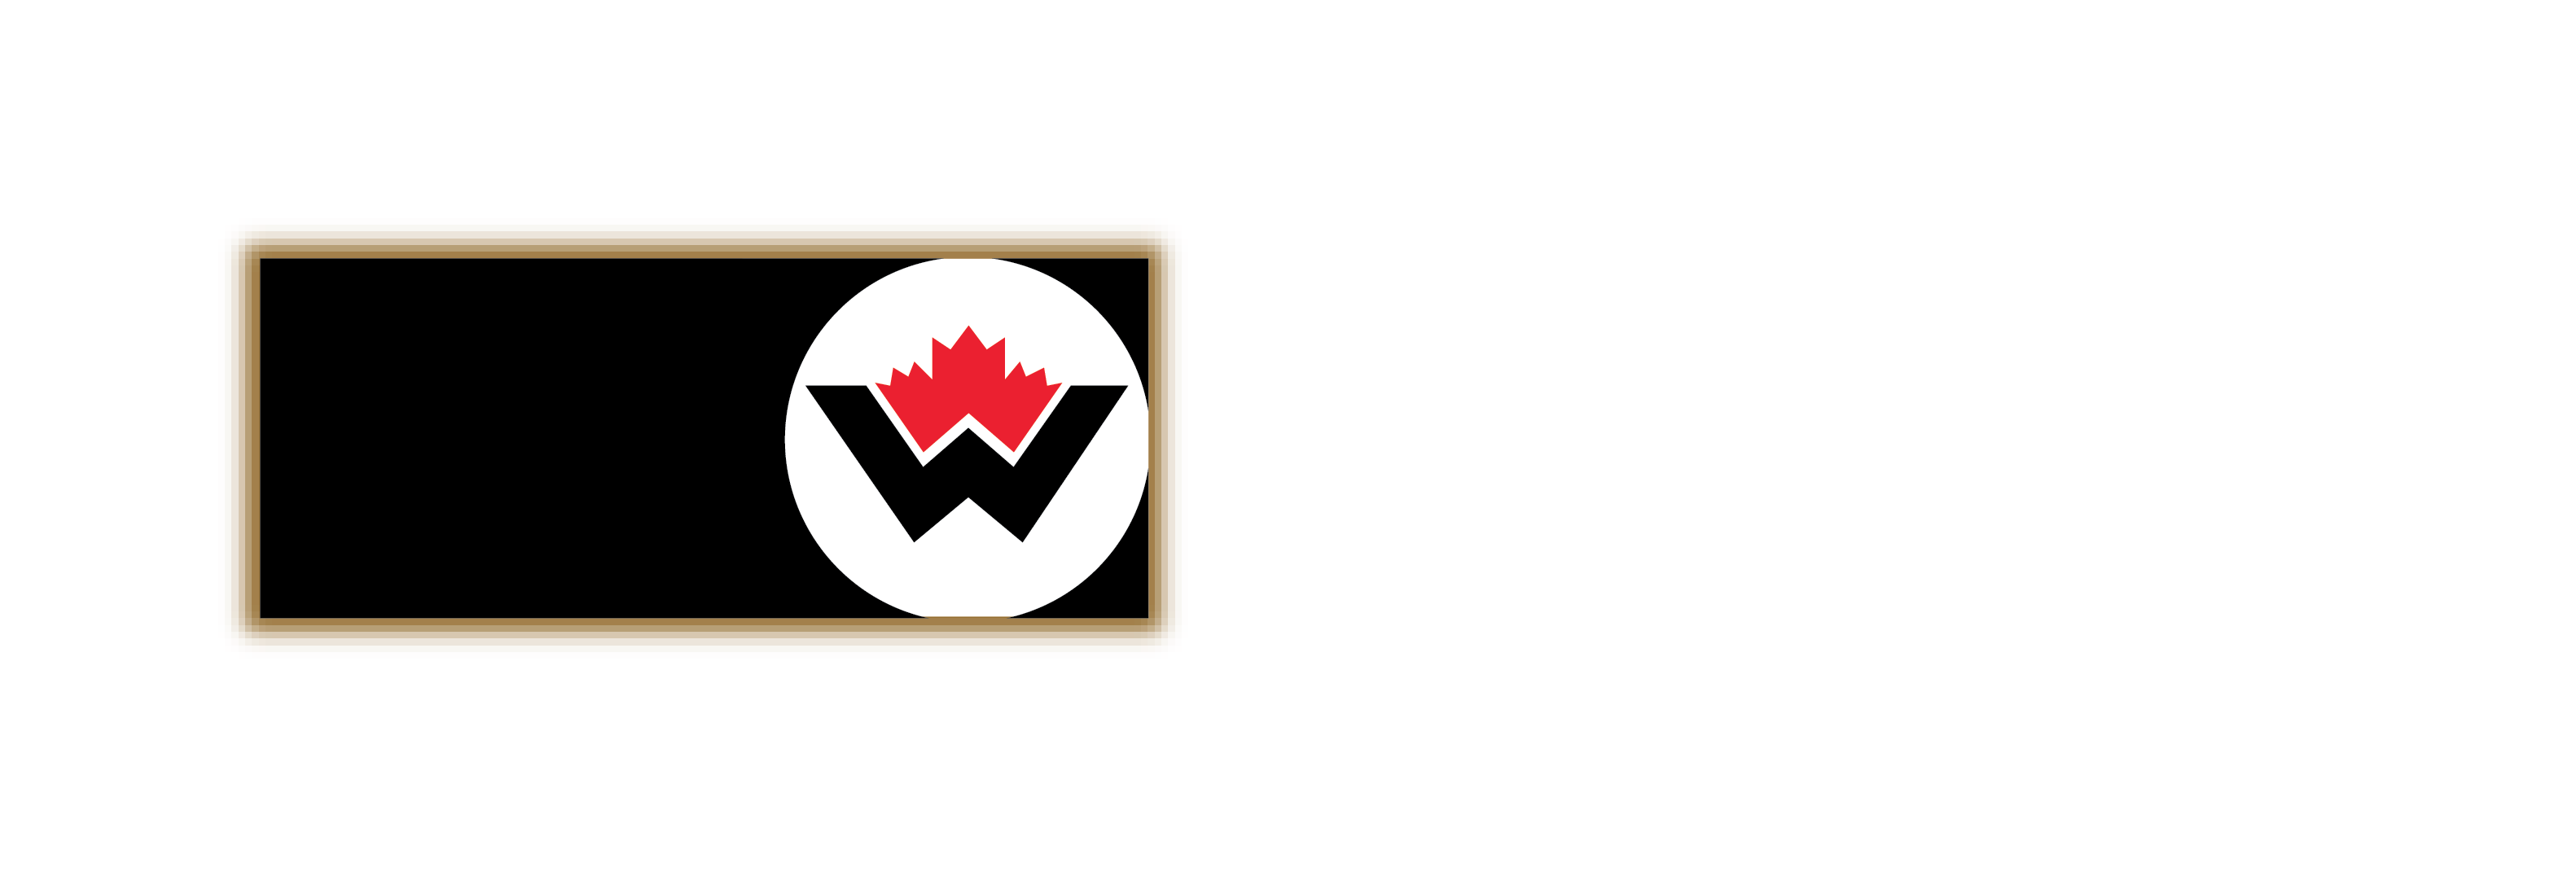 Western Oilfield Specialties Corp